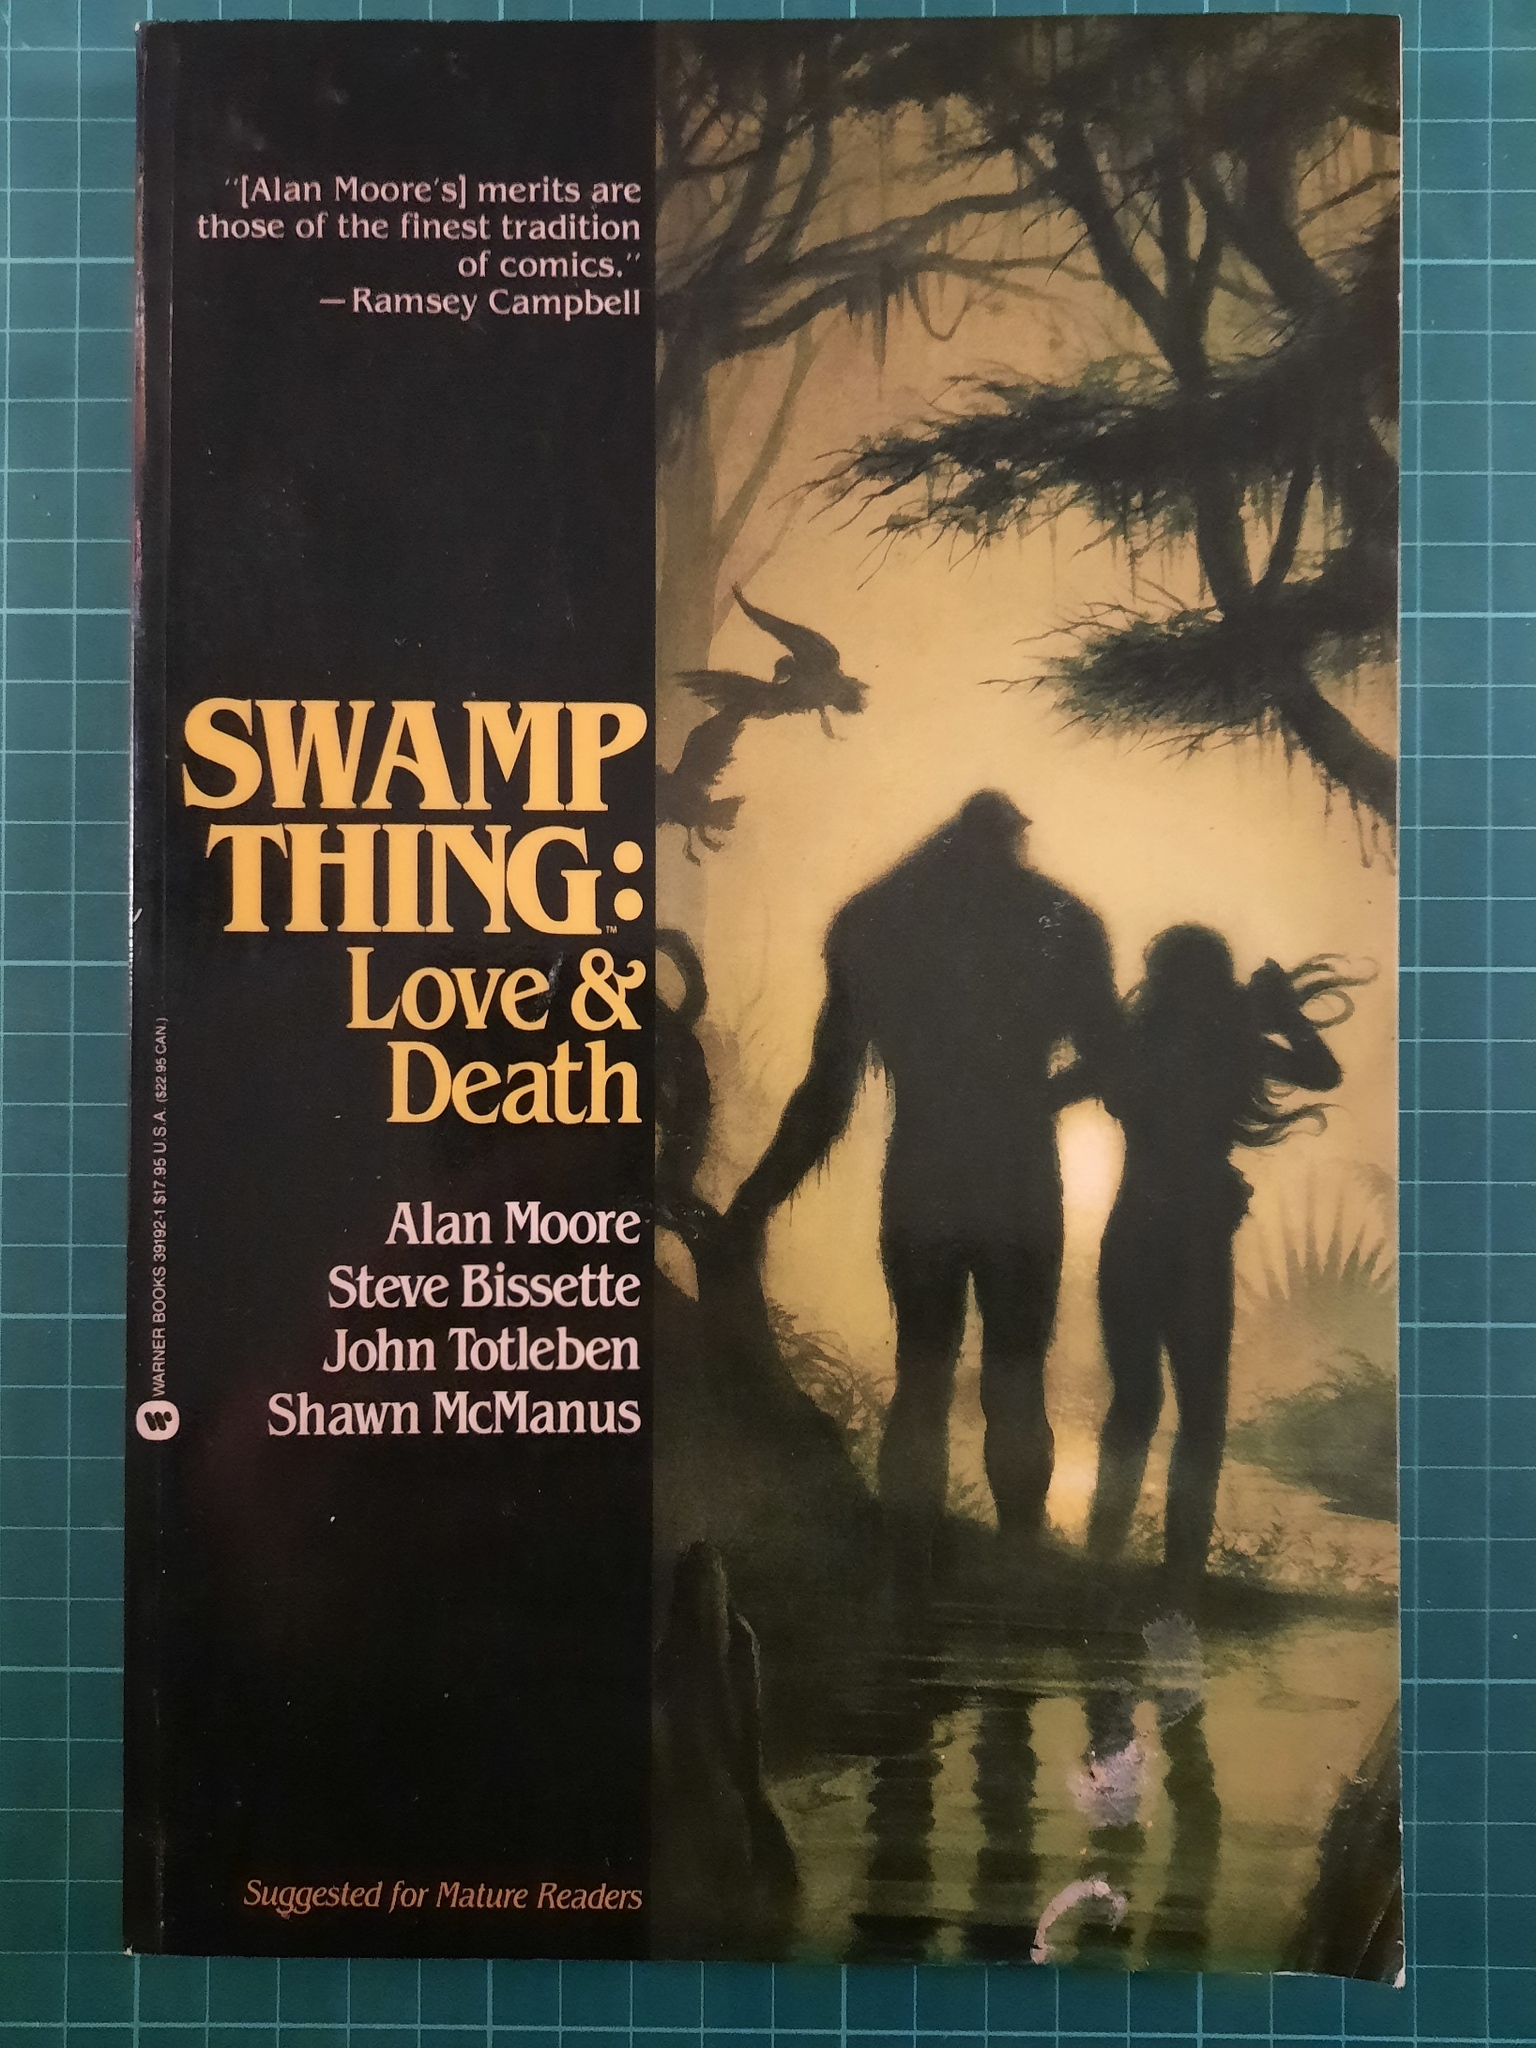 Swamp thing : Love & death